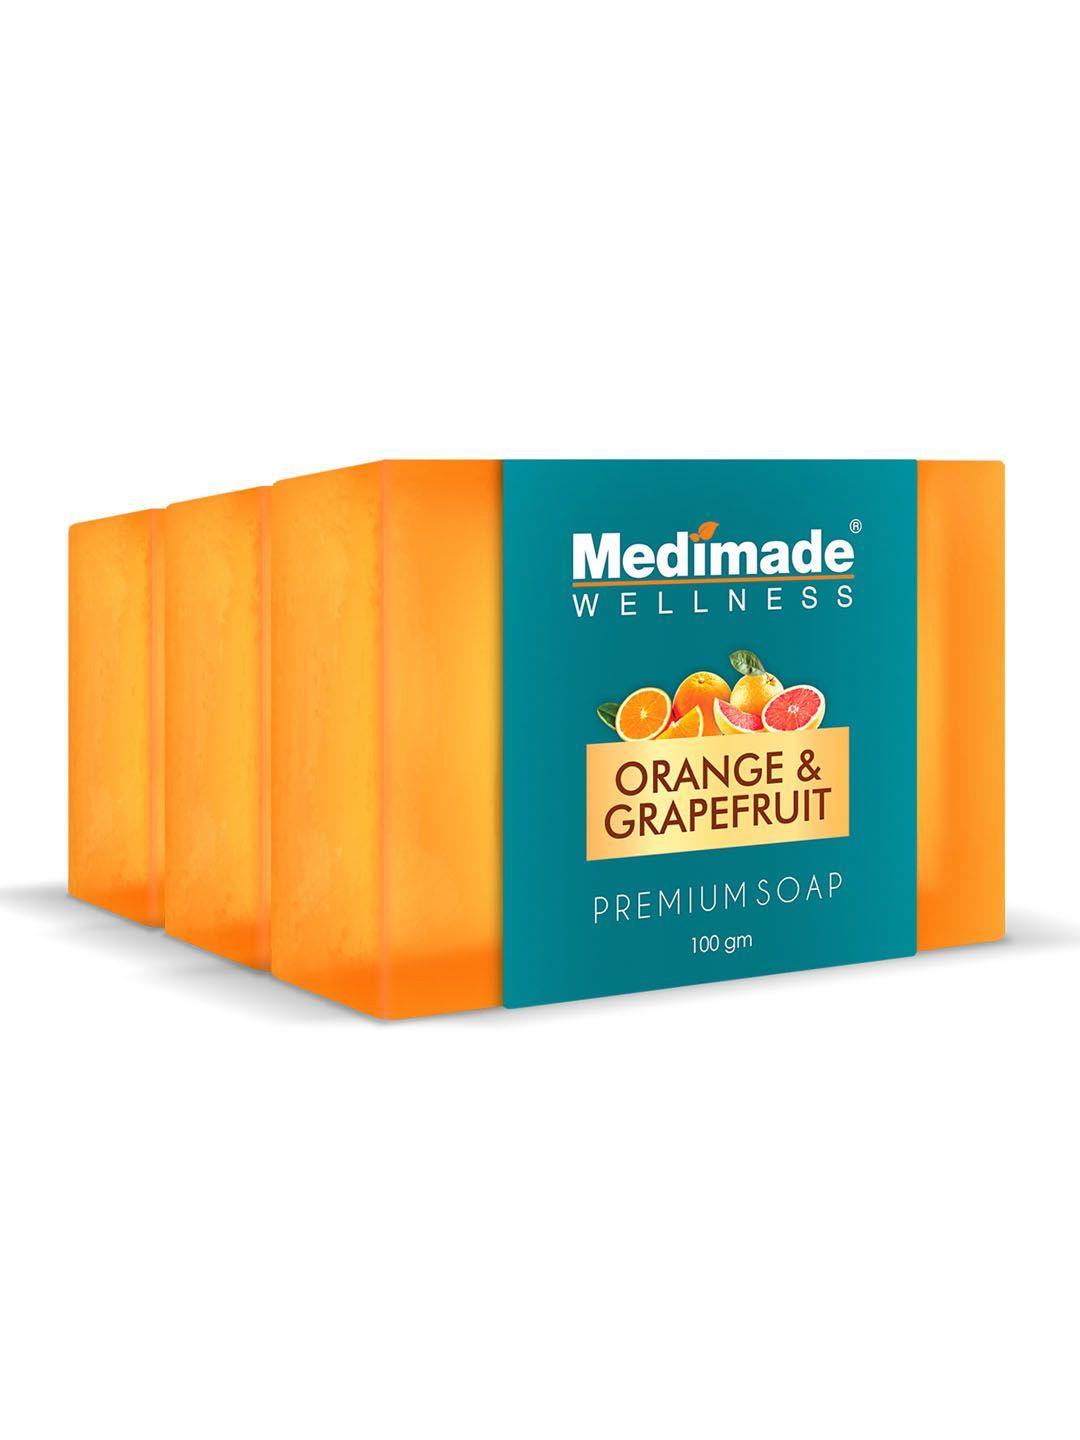 medimade set of 3 orange & grapefruit premium beauty soap for clear complexion - 100g each